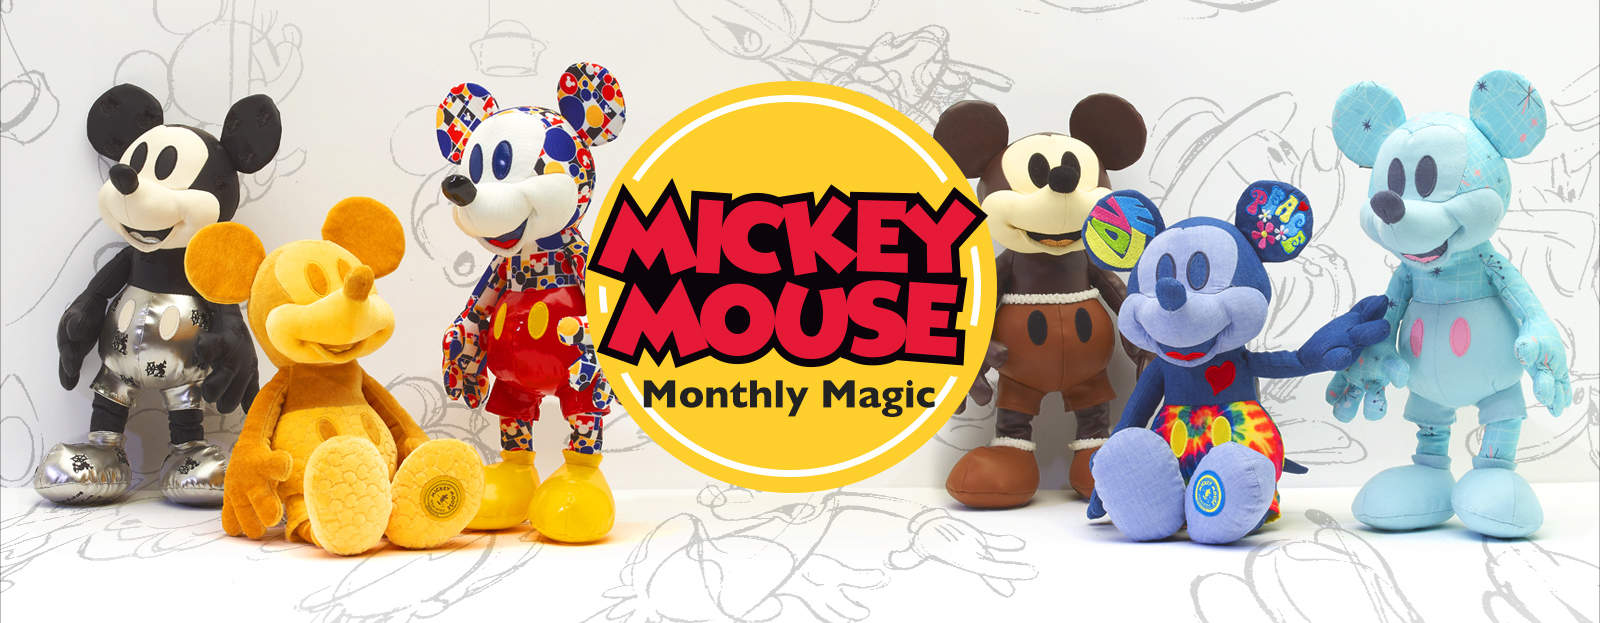 mickey mouse memories collection november